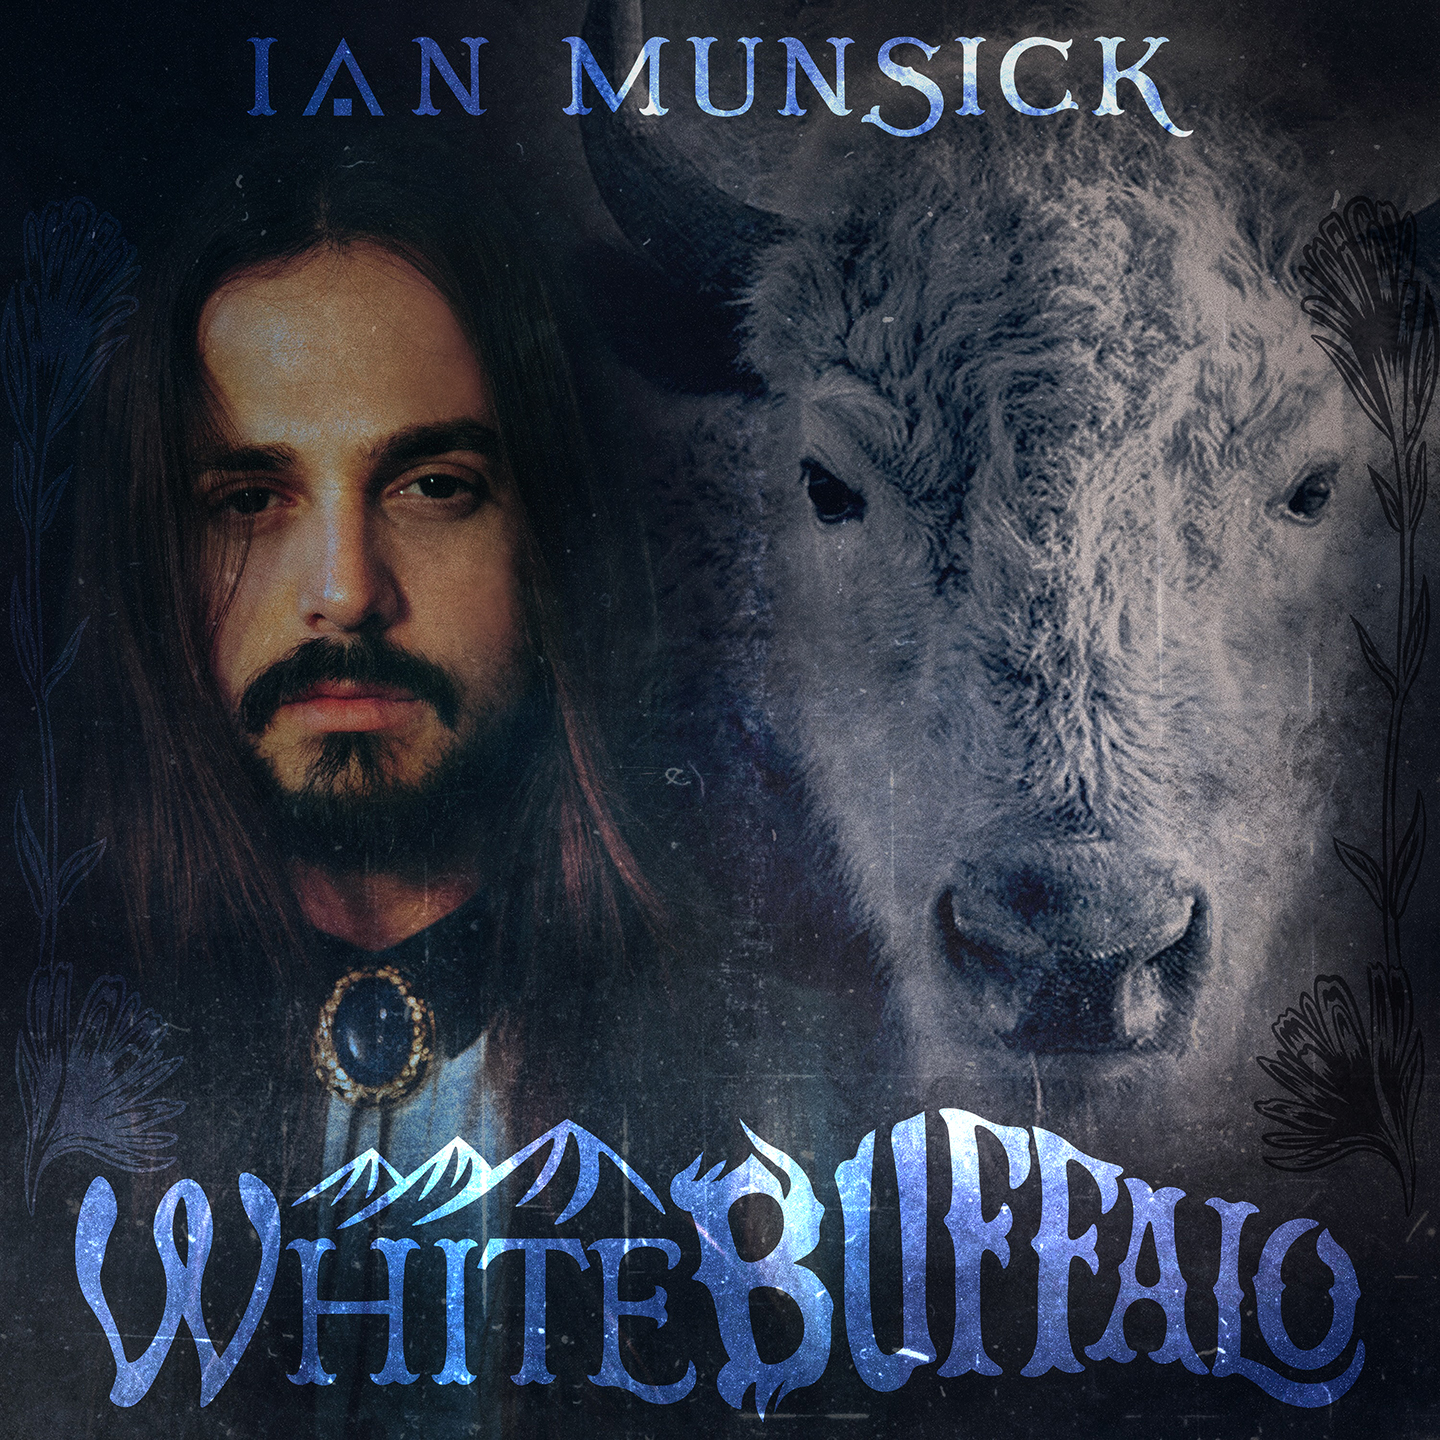 IAN MUNSICK ANNOUNCES SOPHOMORE ALBUM "WHITE BUFFALO" DUE APRIL 7